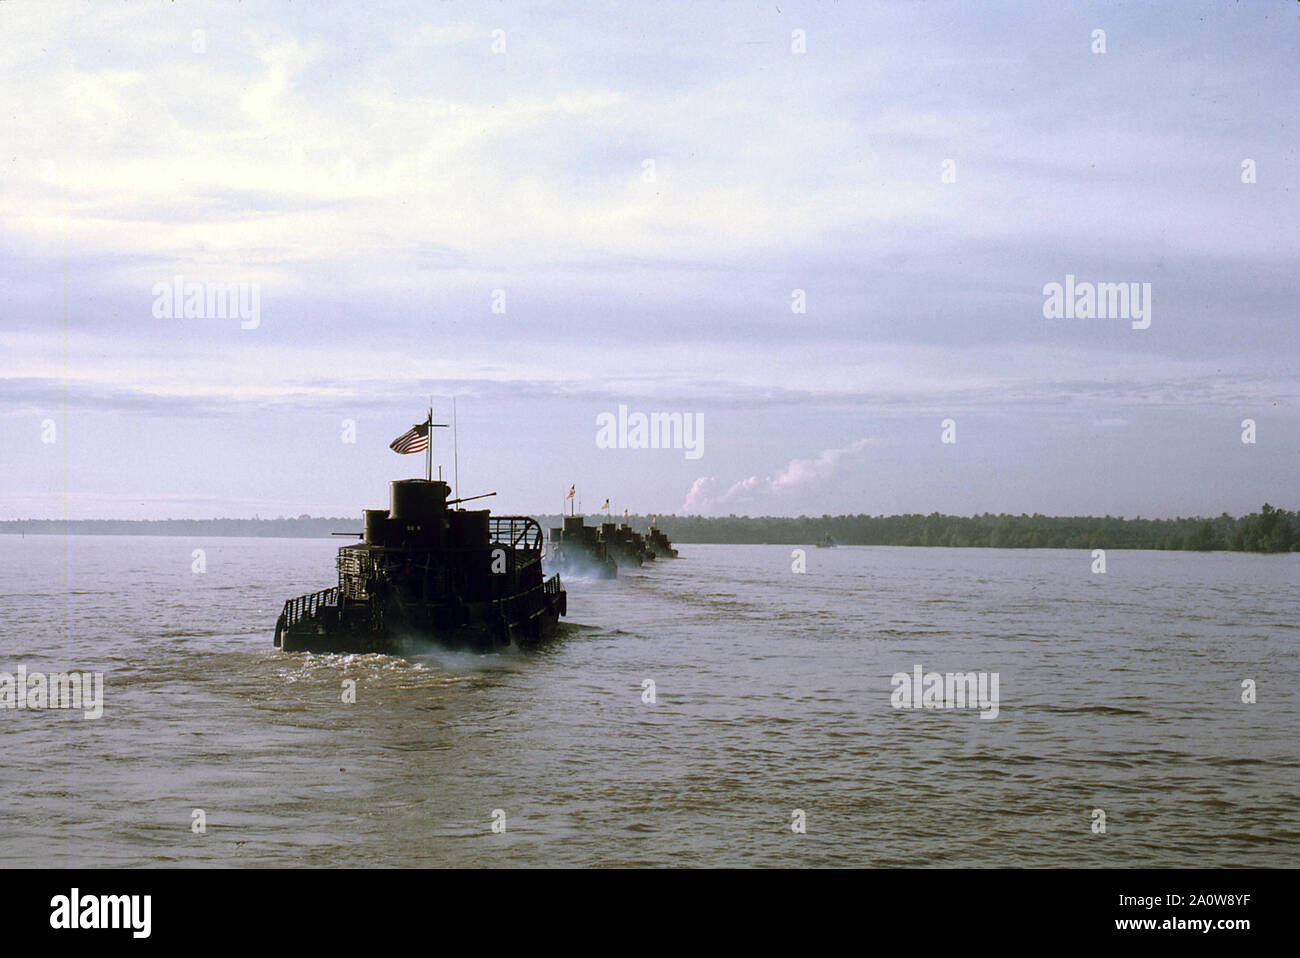 USA Vietnam-Krieg / Vietnam War - ATC Armored Troop Carrier / Tango-Boat Stock Photo